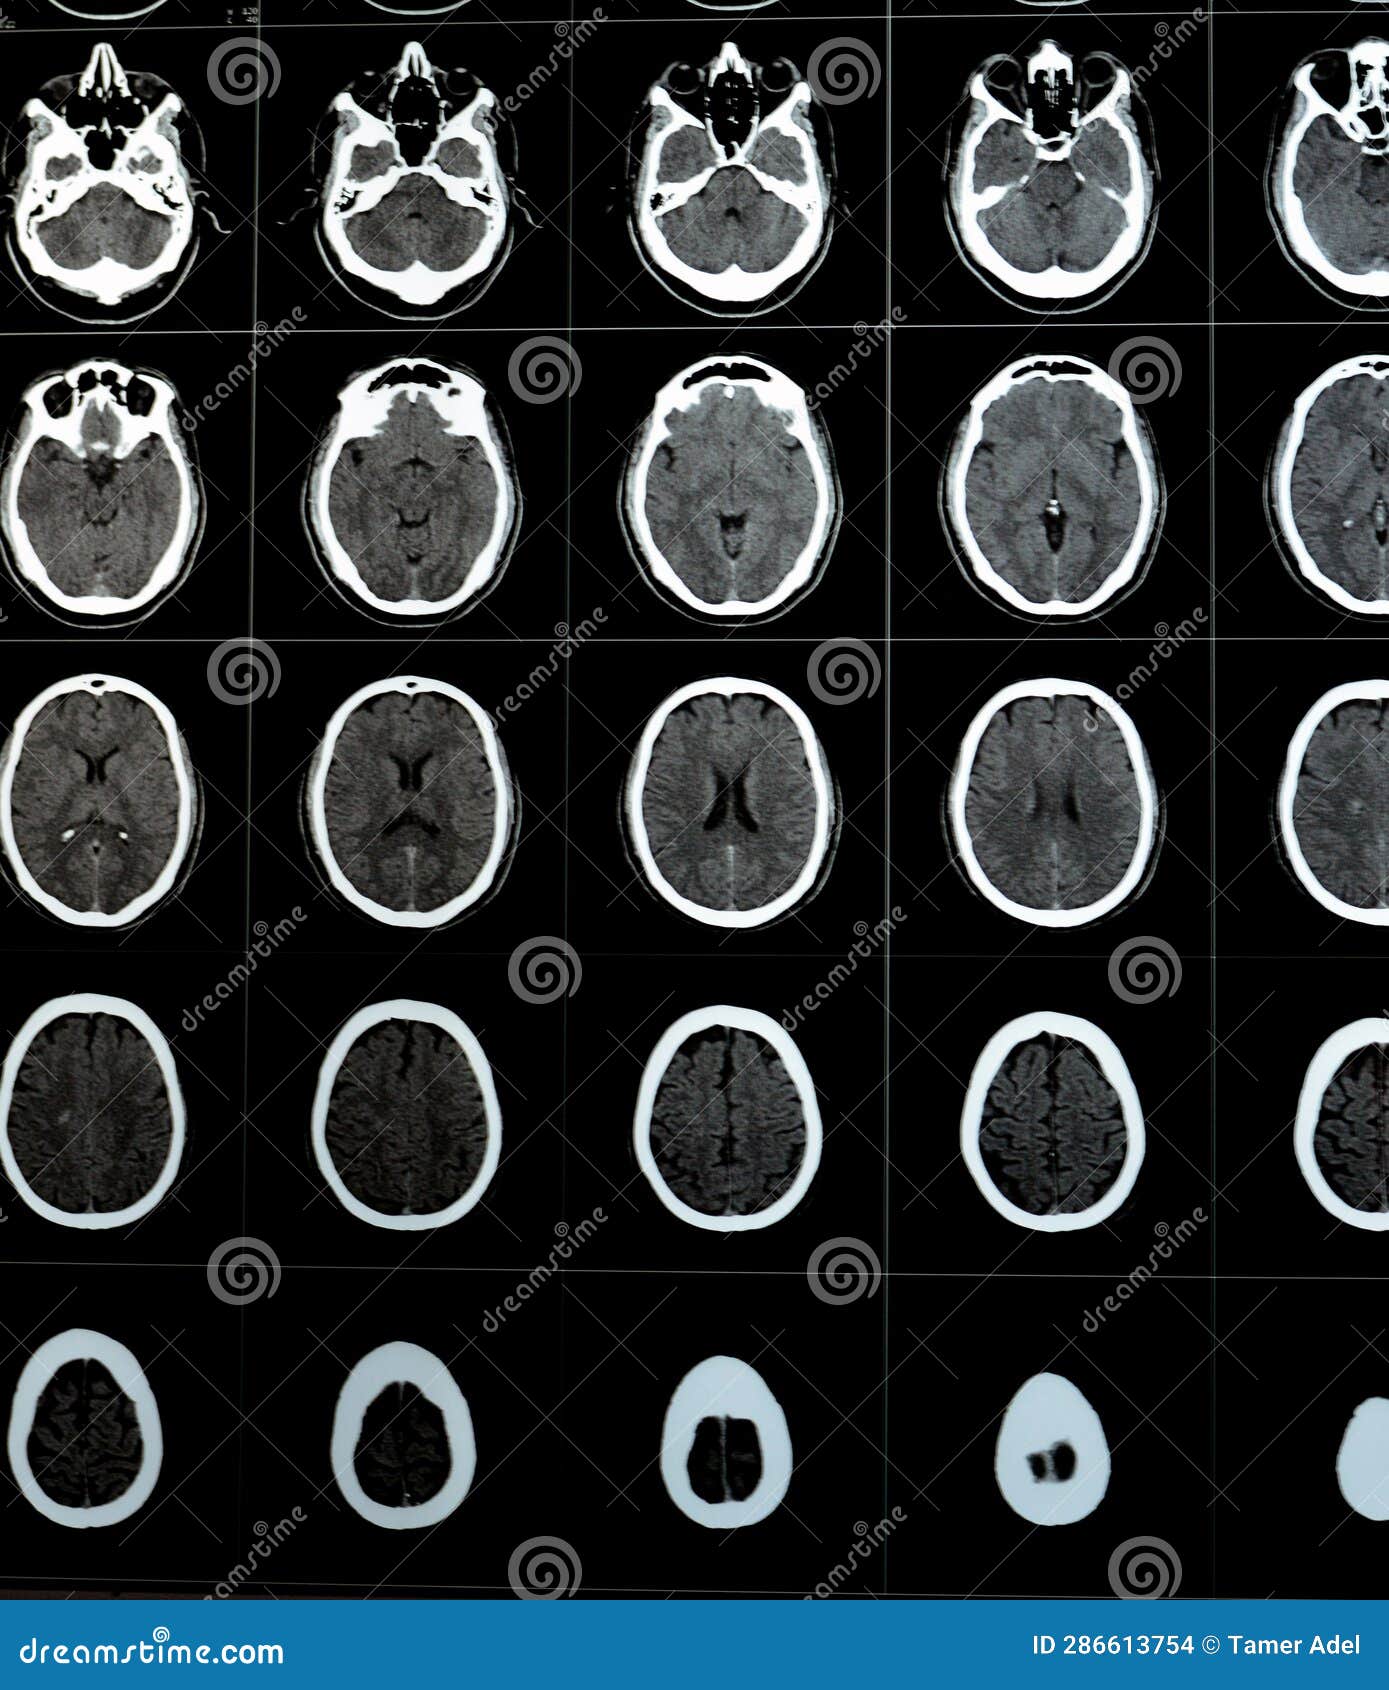 brain ct scan showing brainstem cavernoma, right centrum semiovale developmental venous anomaly, intra cerebral haematoma, faint